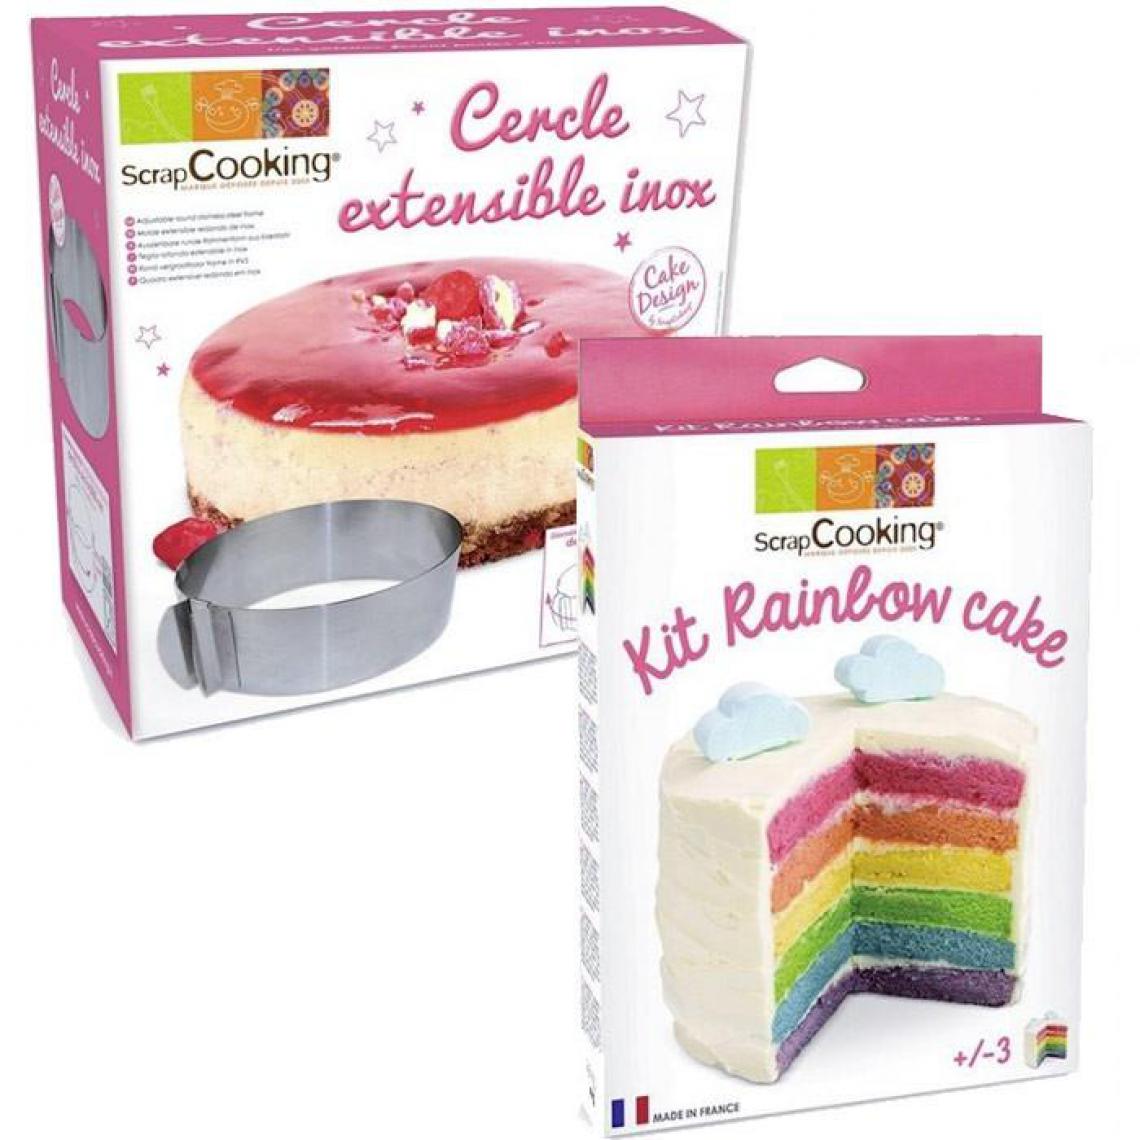 Scrapcooking - Kit Rainbow Cake + Cercle extensible inox - Kits créatifs